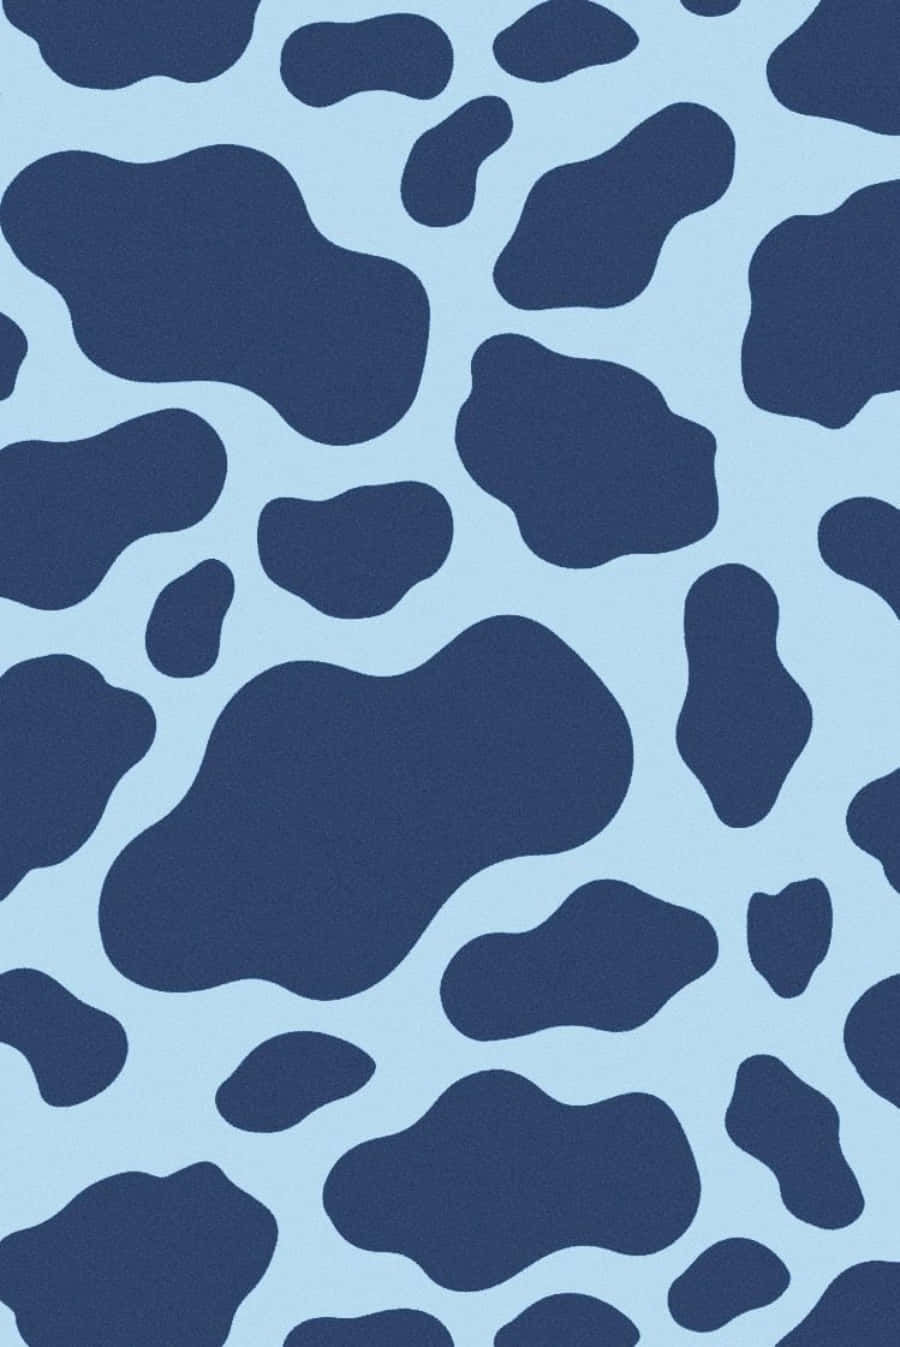 Fångauppmärksamheten I Stil Med Blue Cow Print Som Bakgrundsbild På Din Dator Eller Mobil. Wallpaper